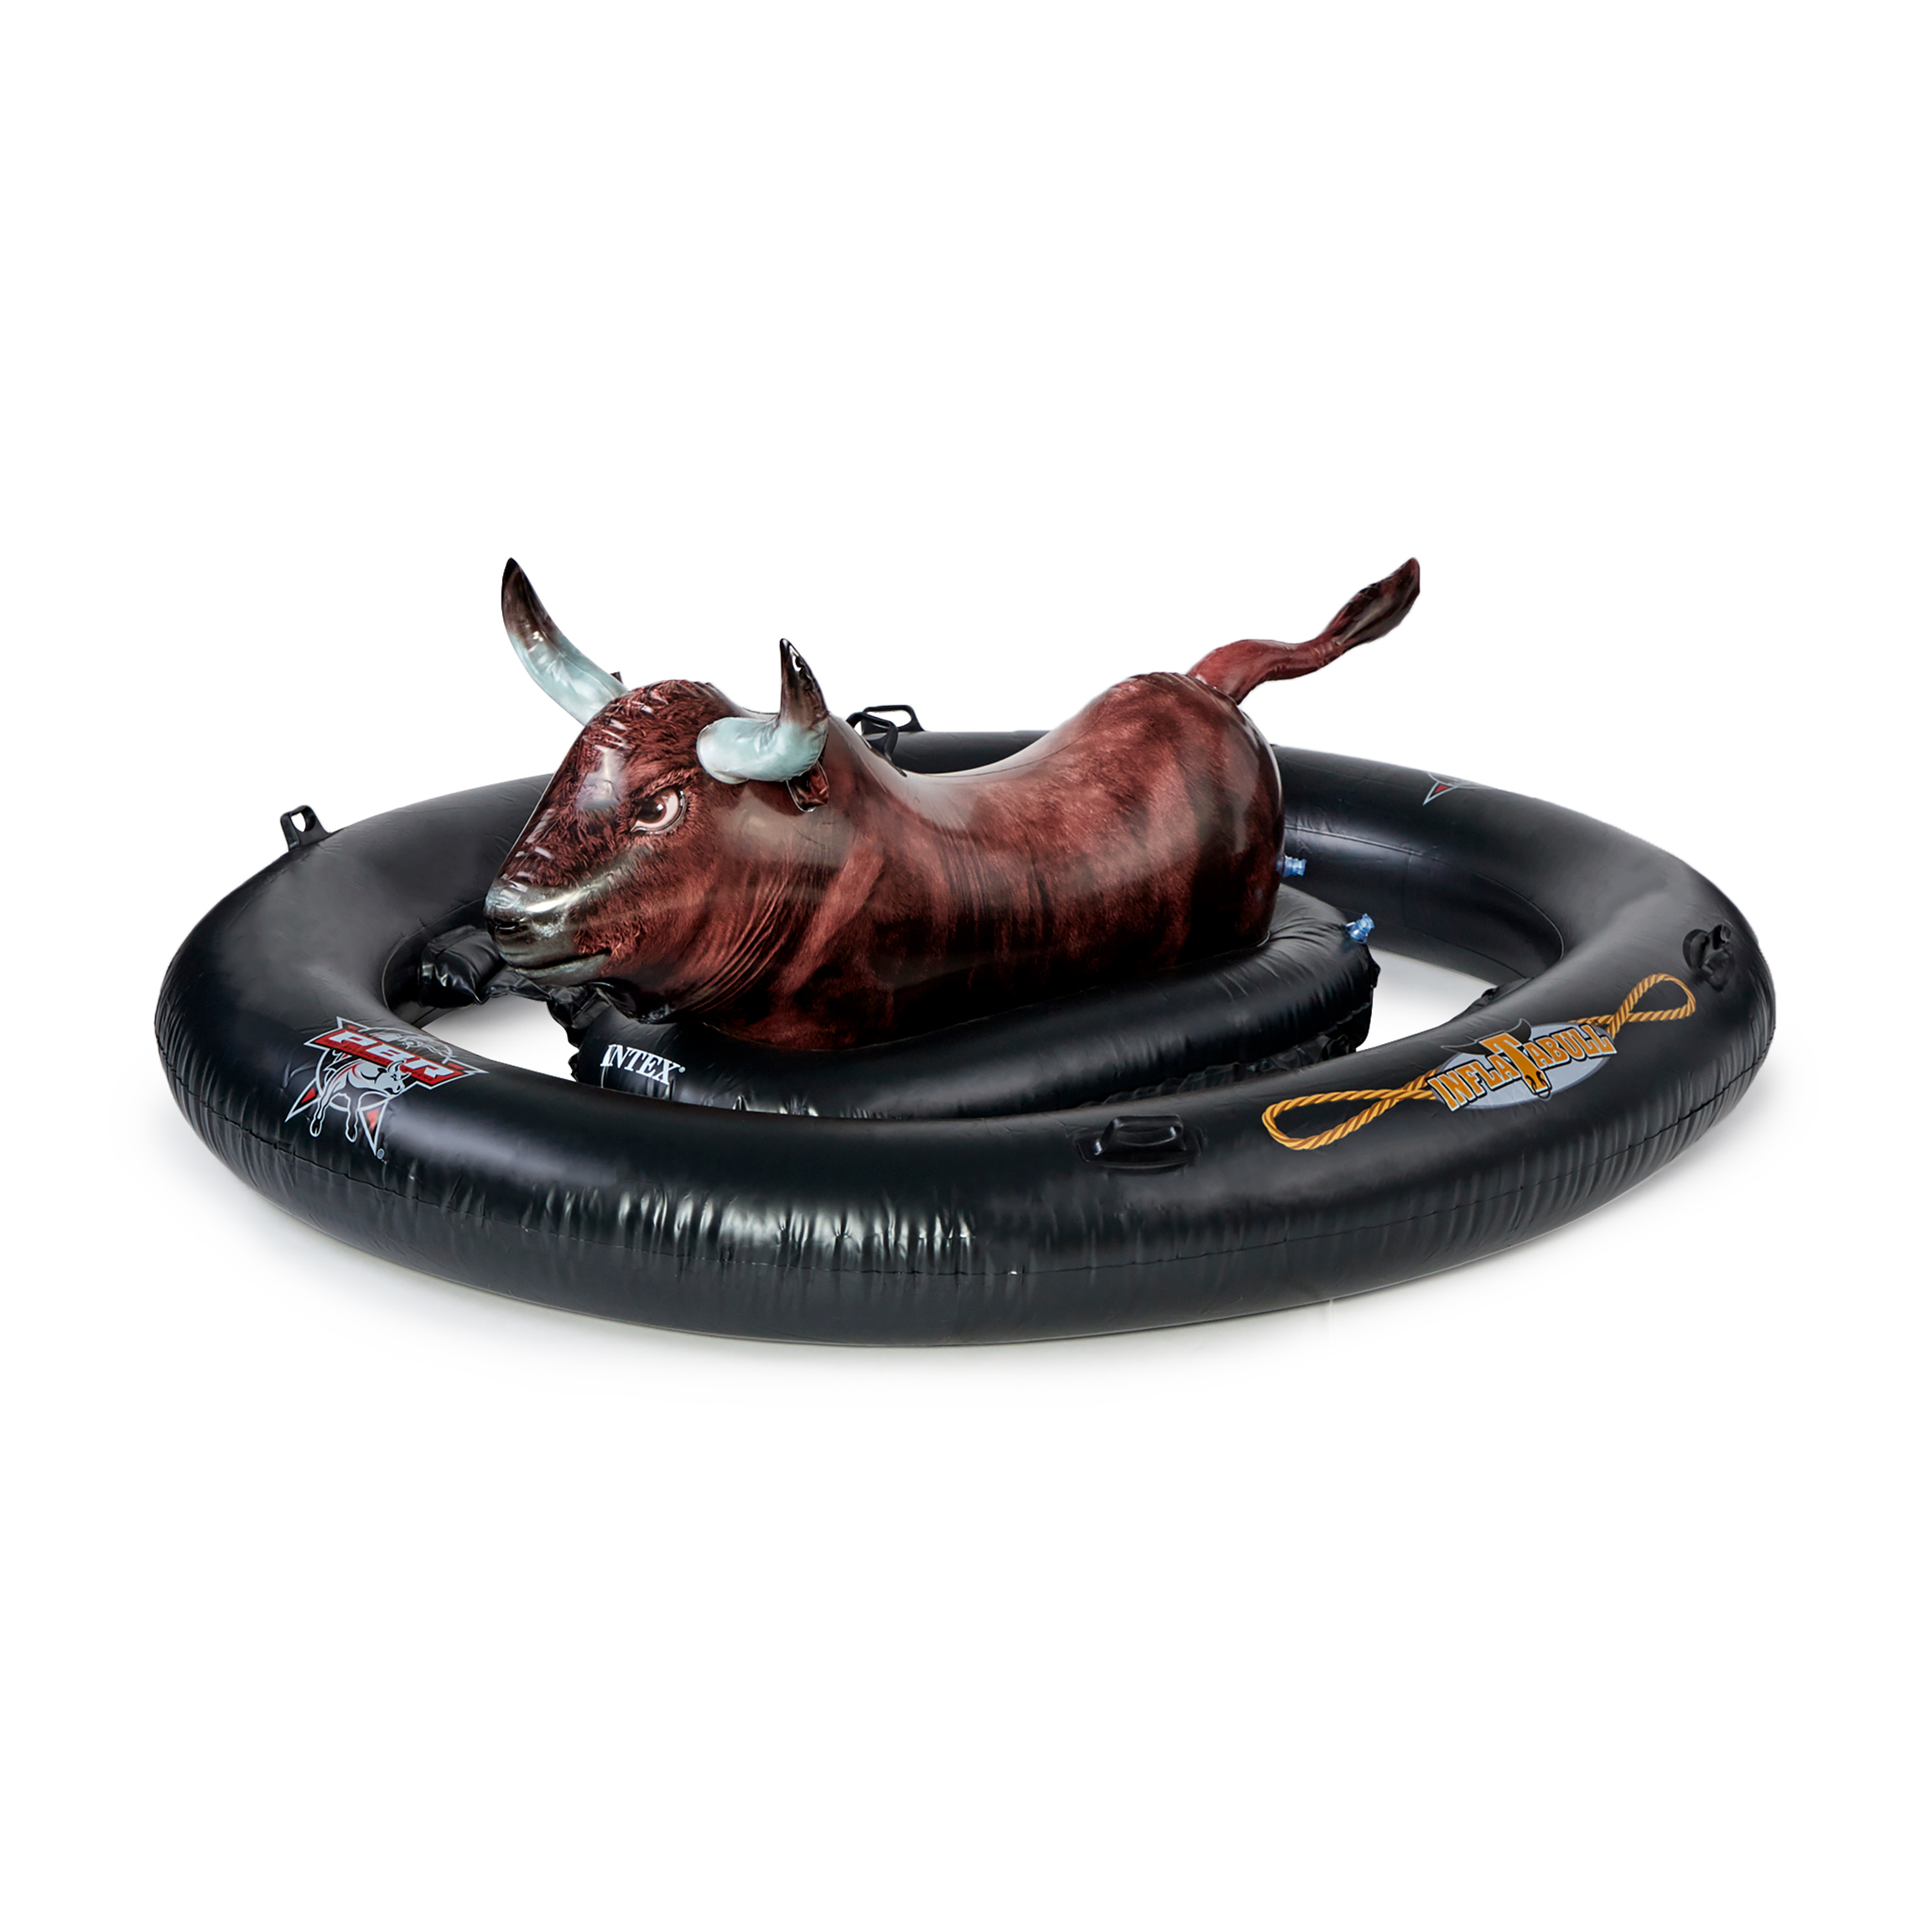 Intex PBR Inflatabull Bull-Riding Giant Inflatable Swimming Pool Lake Fun Float - image 1 of 6